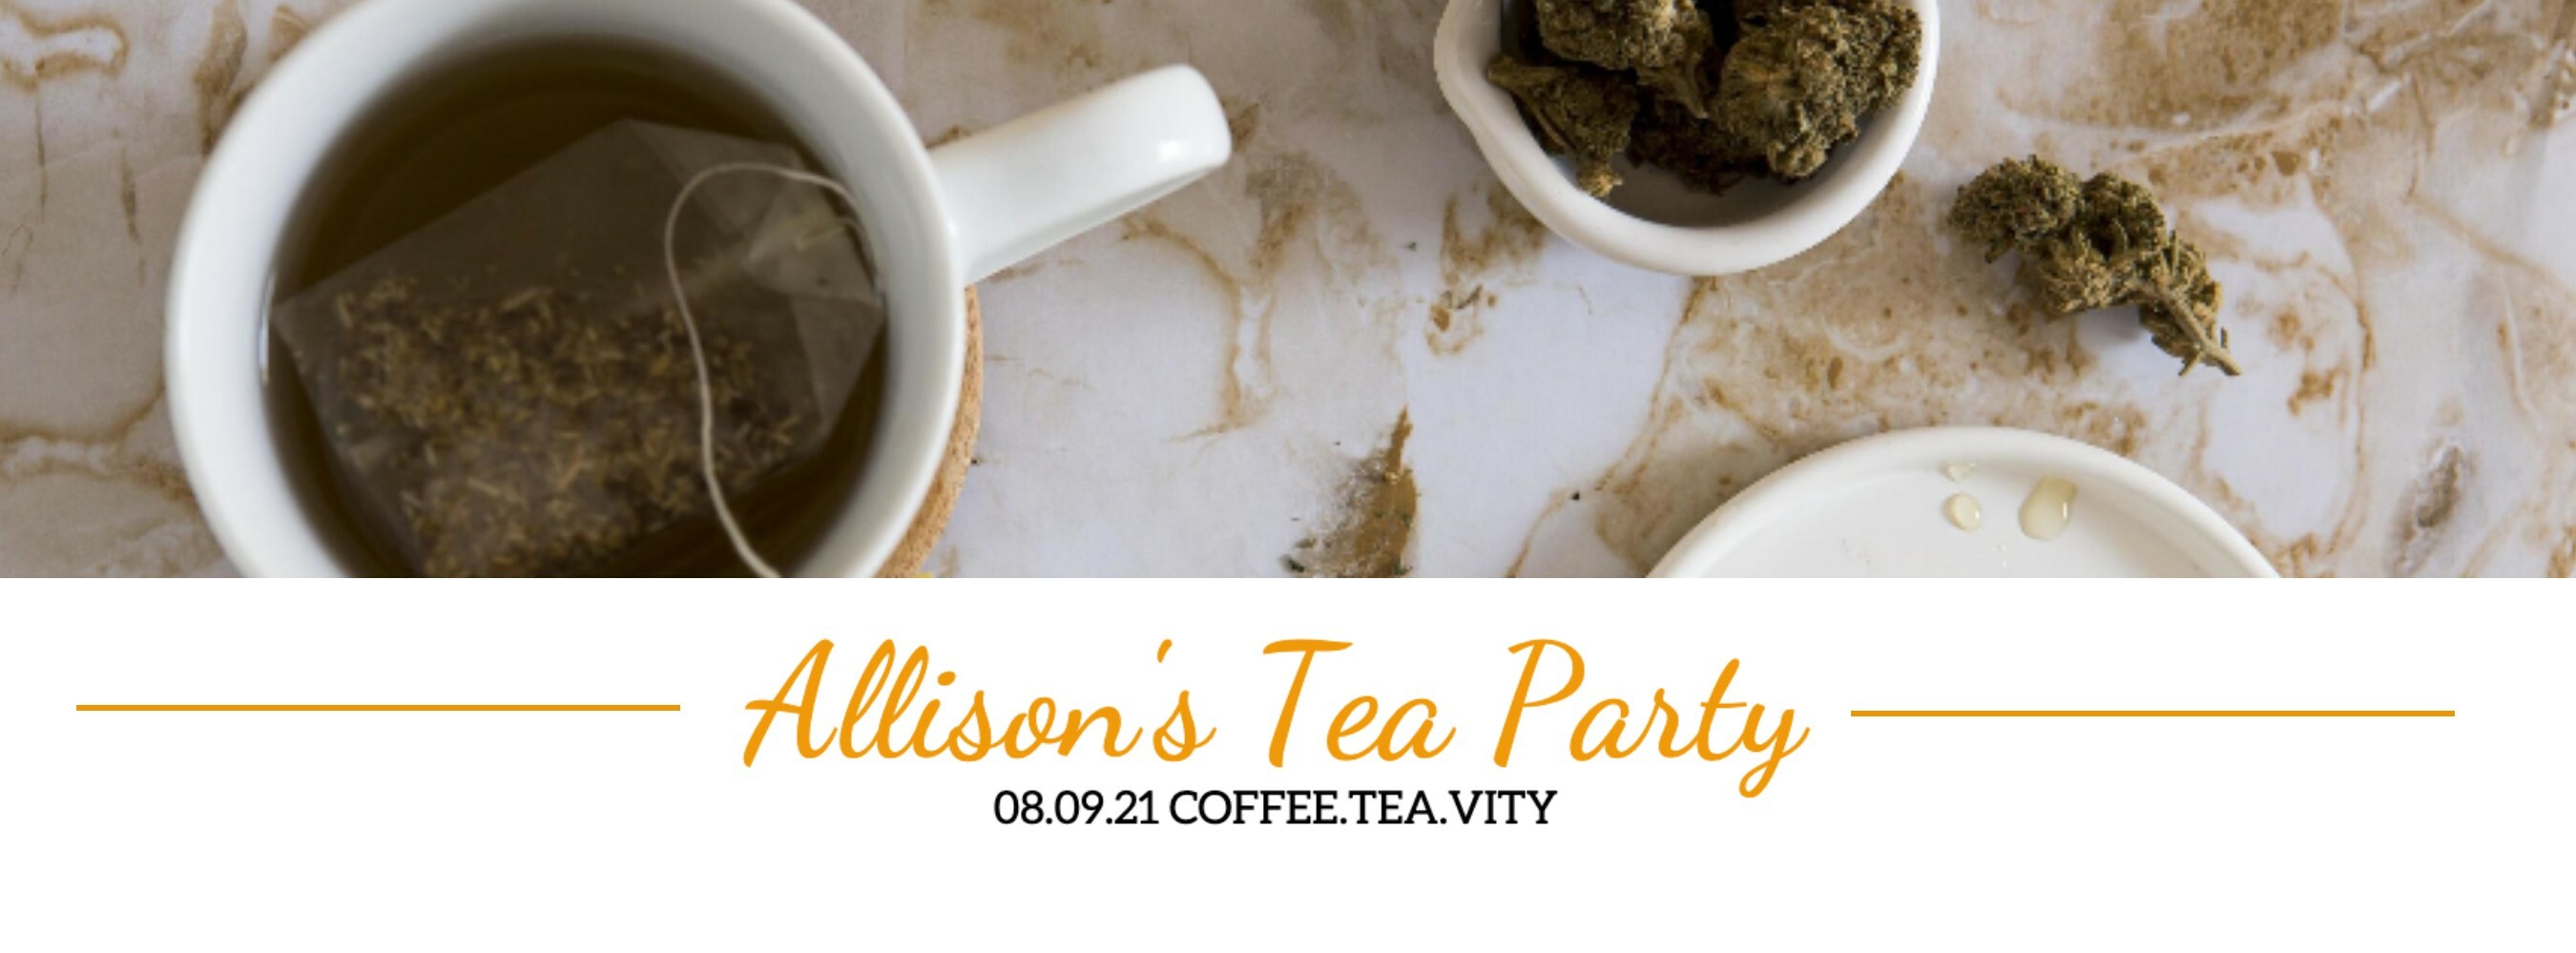 Tea Party Invitation template